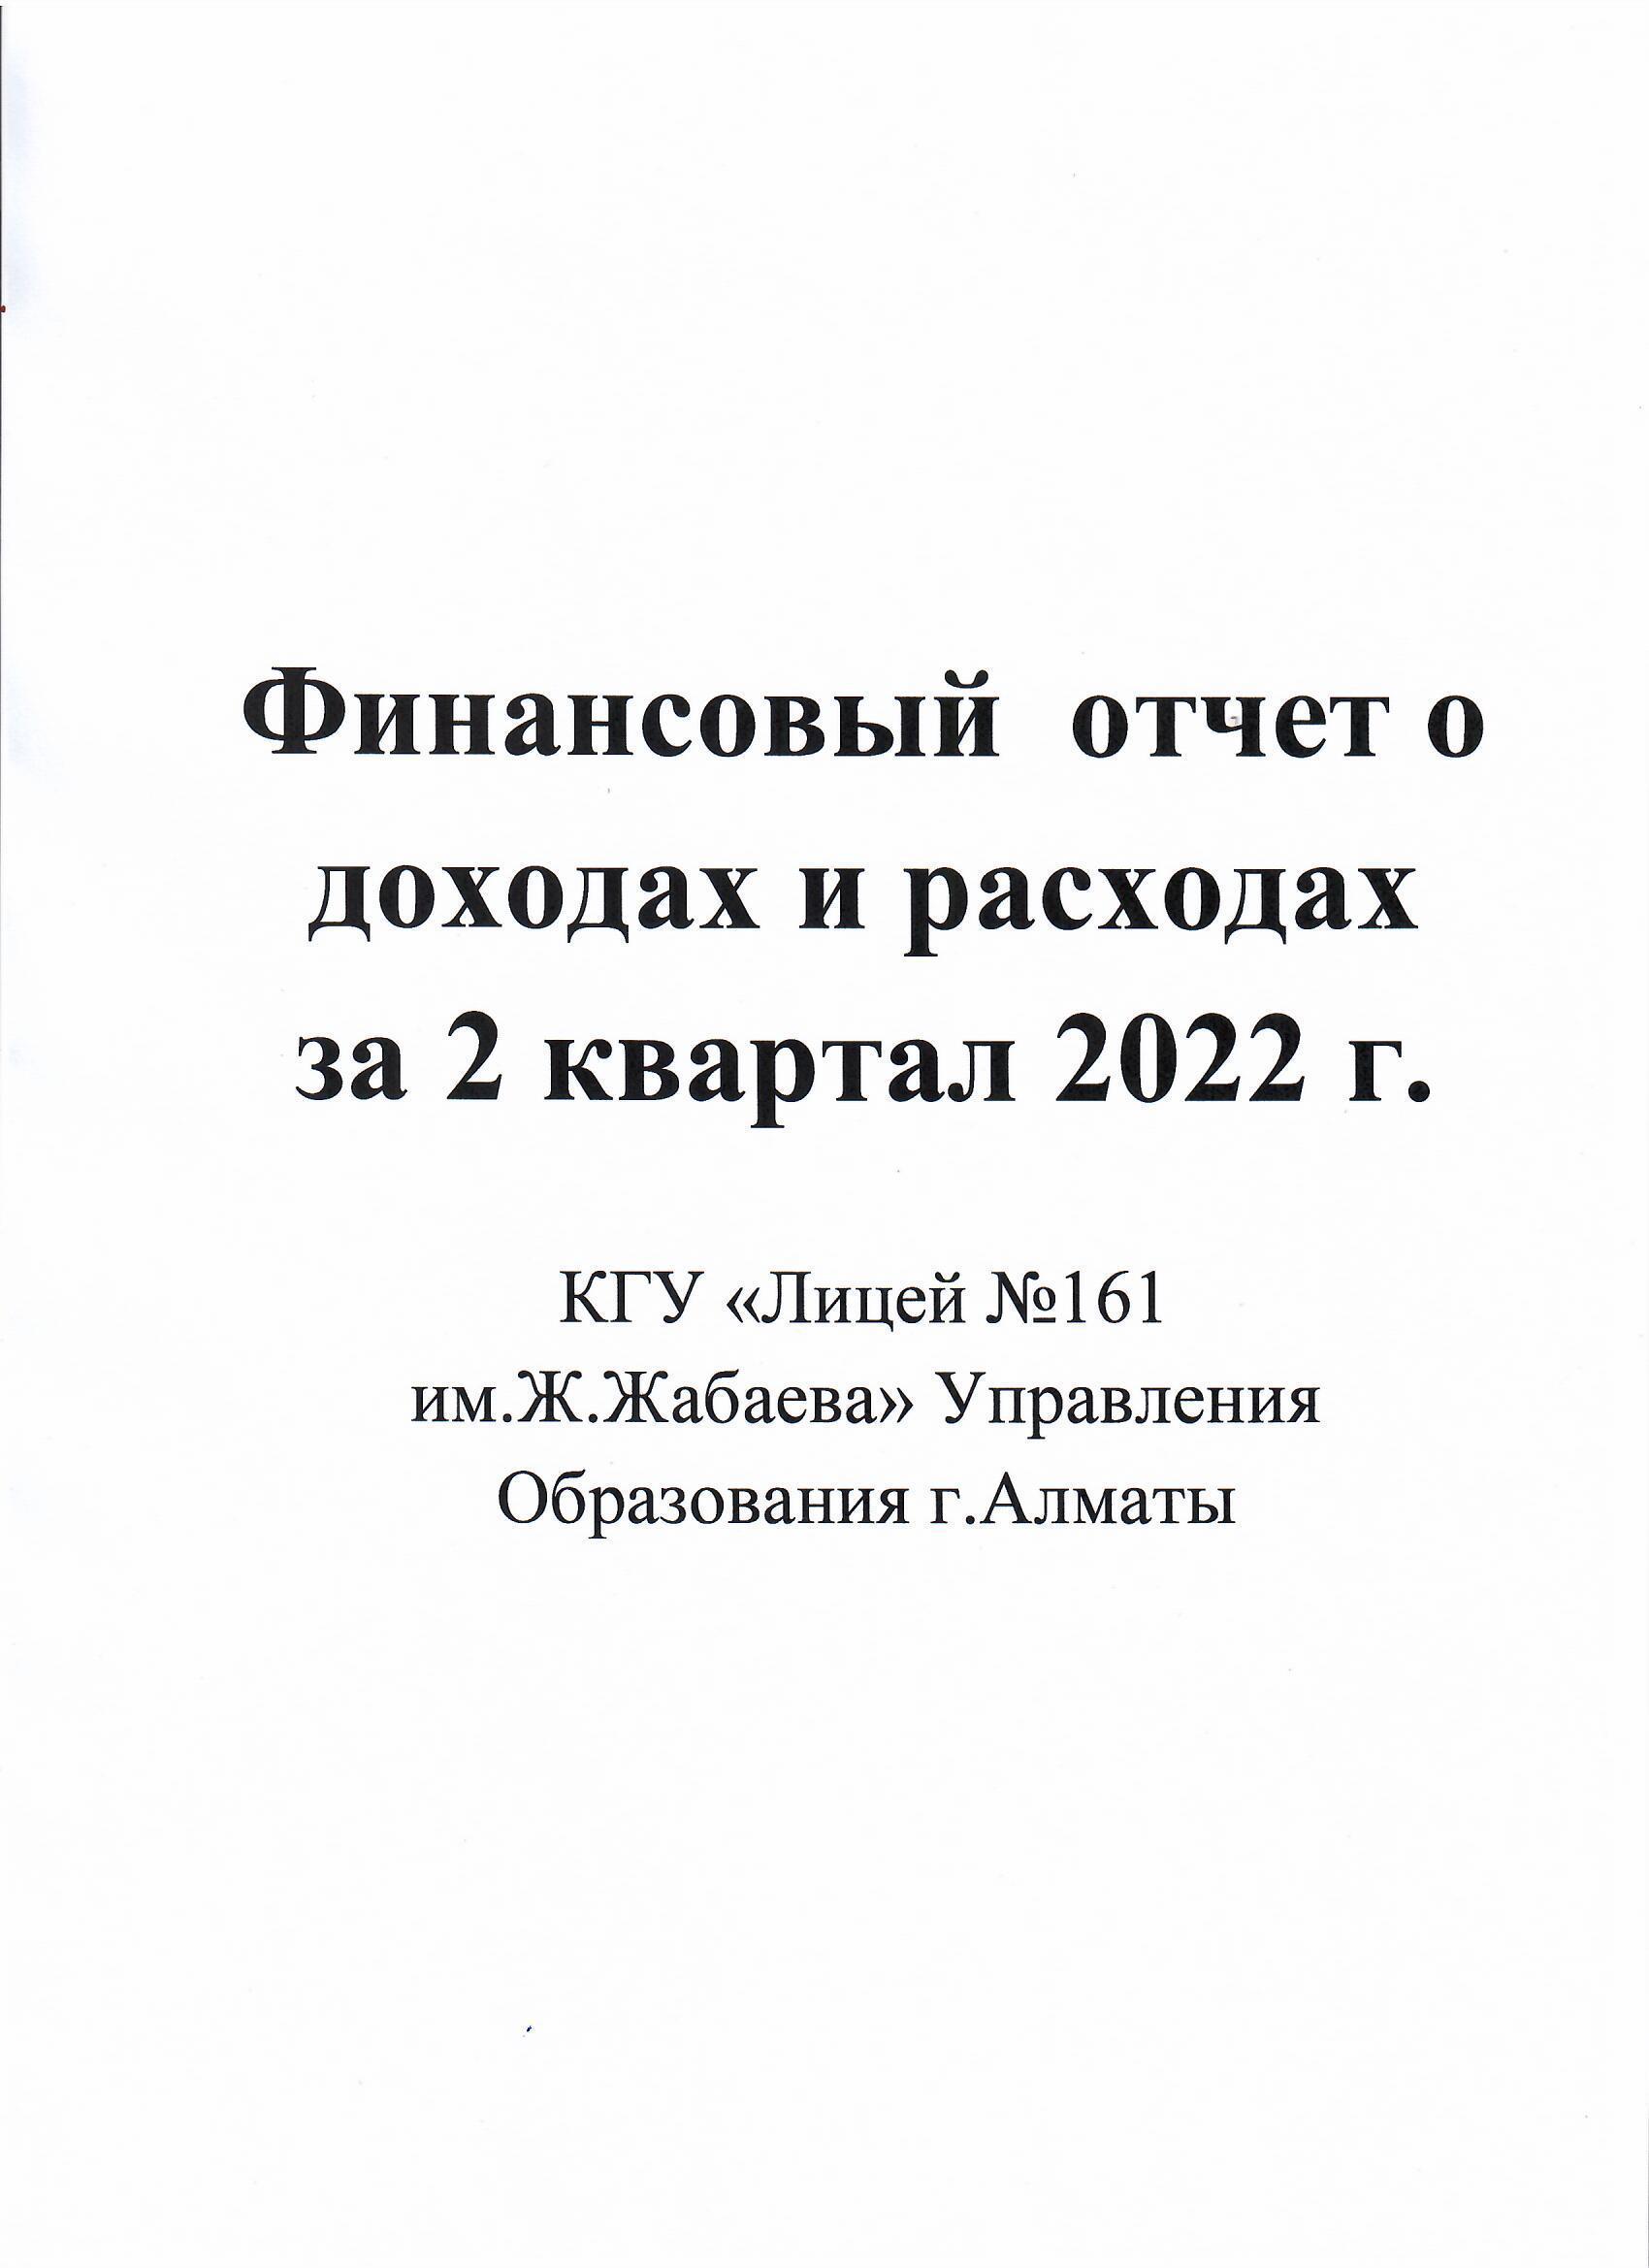 Отчет о доходах и расходах за 2 квартал 2022 года